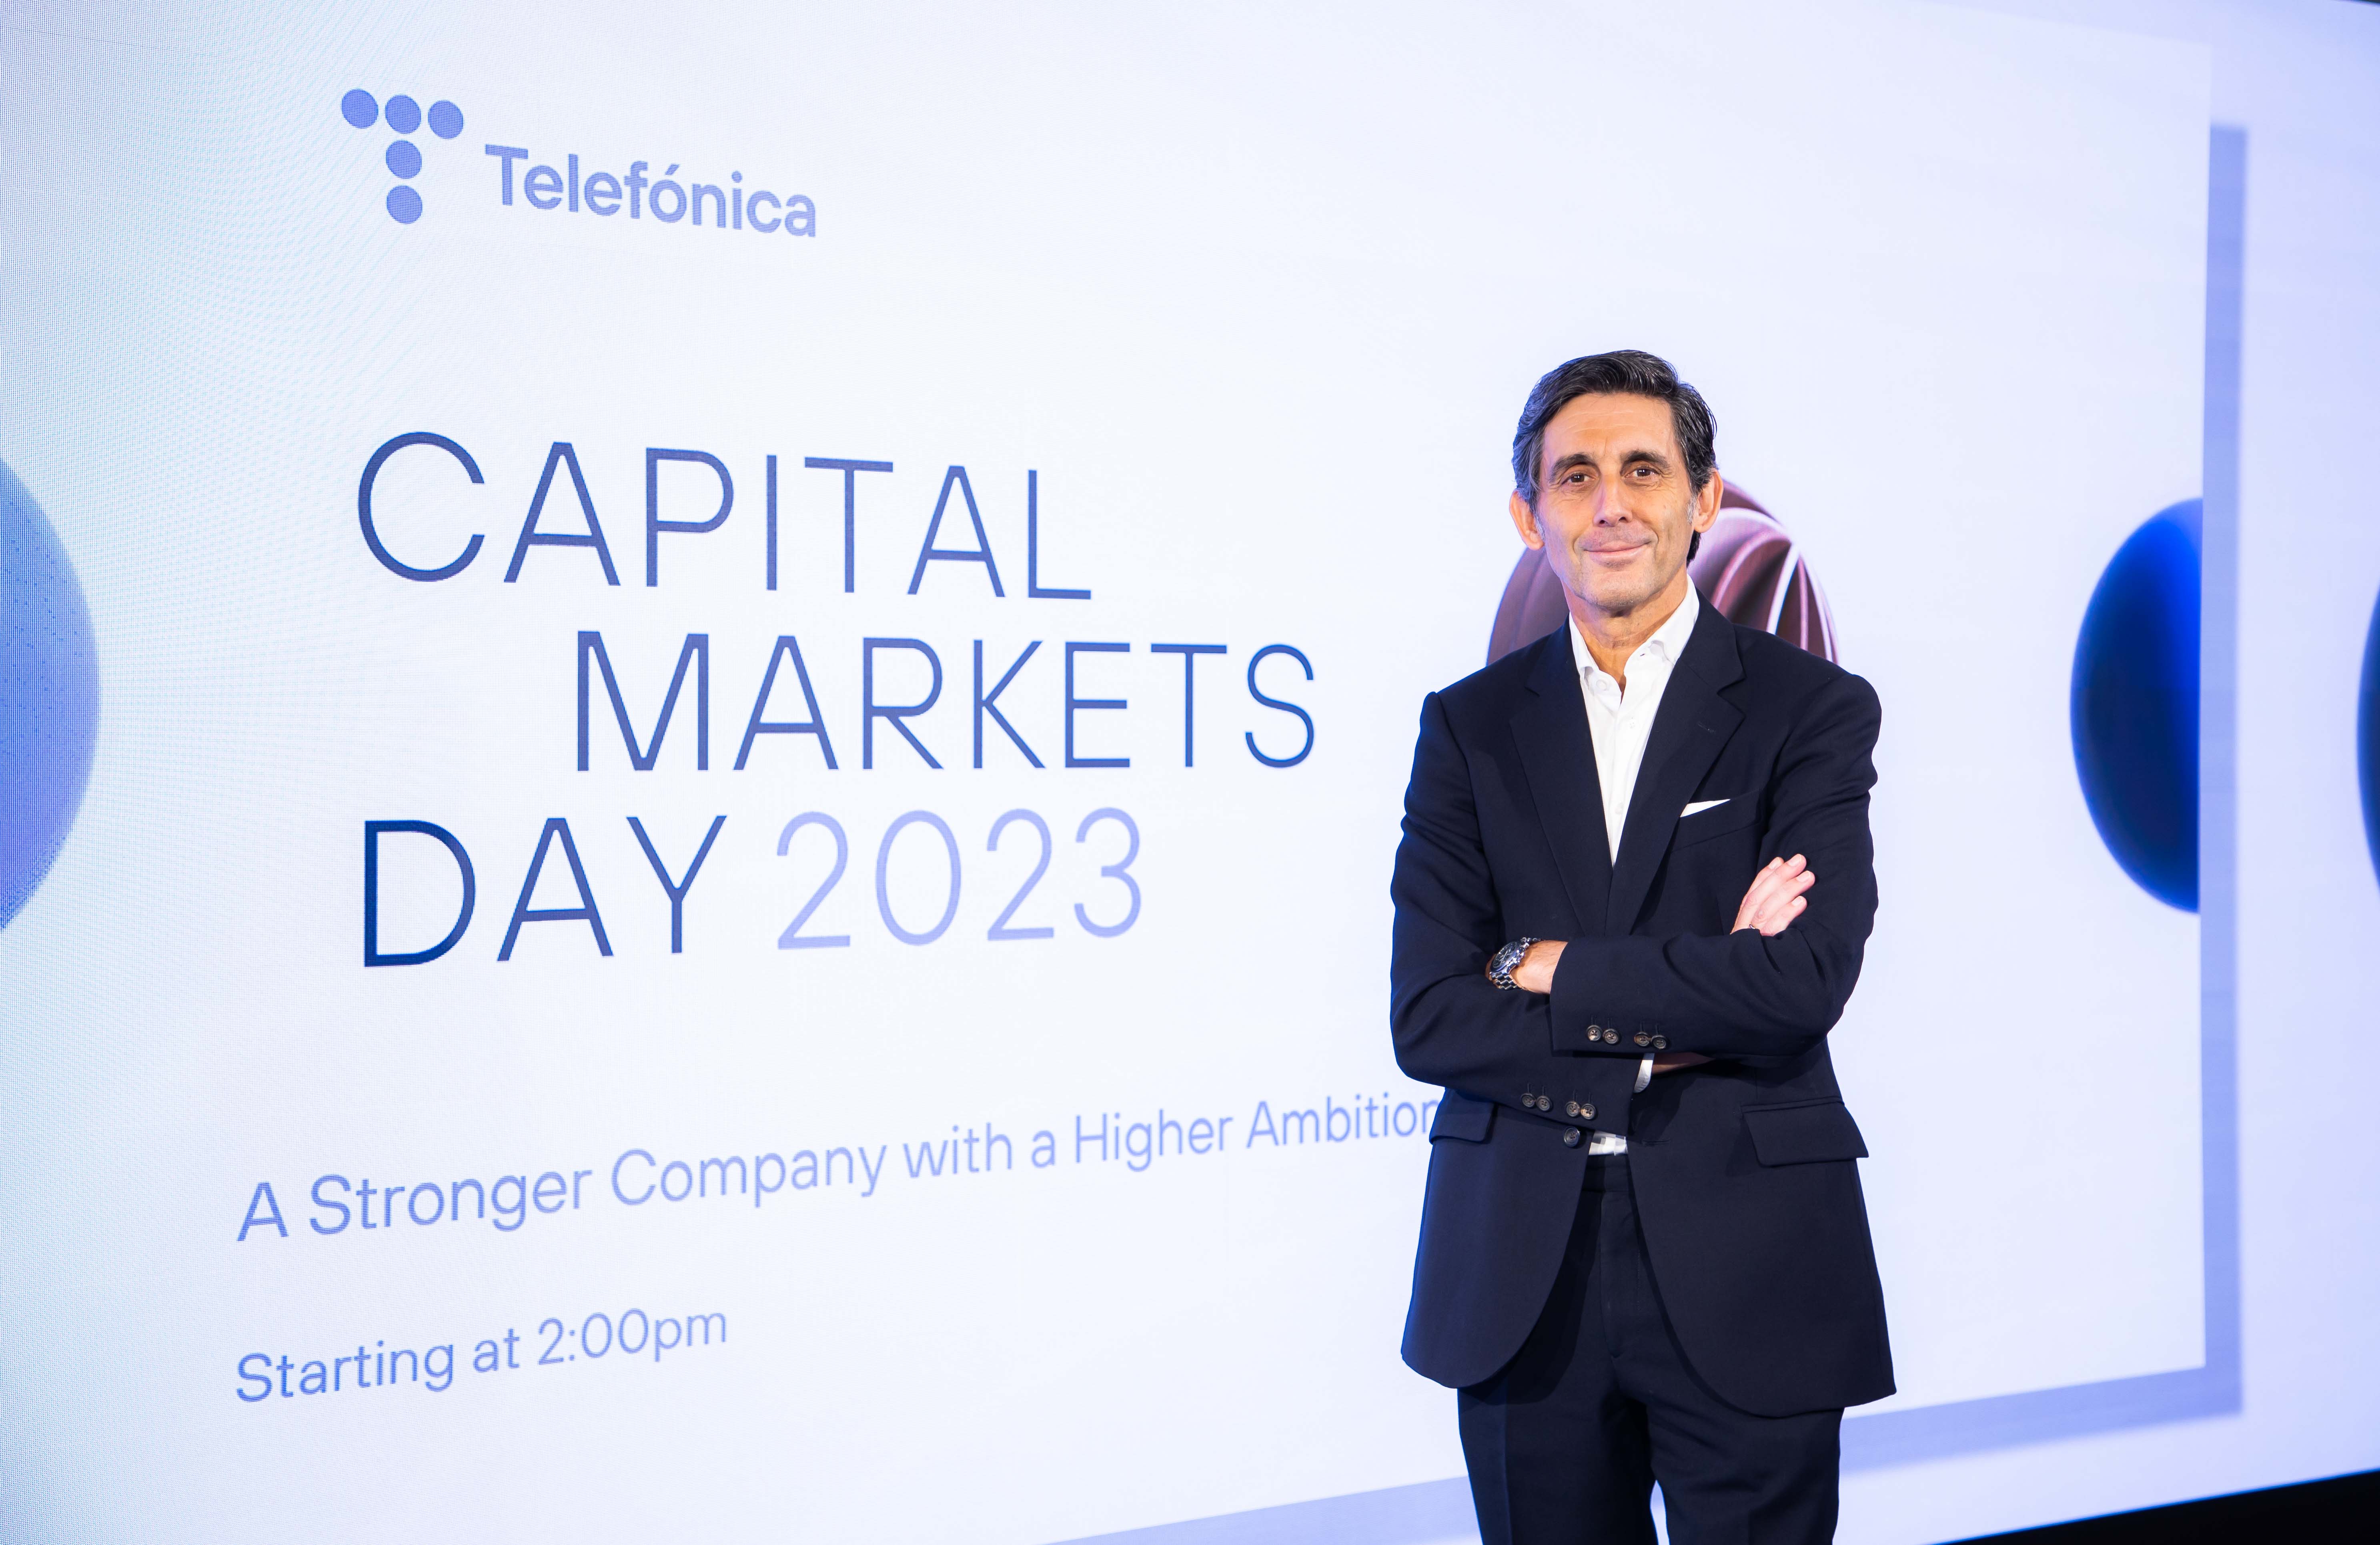 José María Álvarez-Pallete, Chairman & CEO, Telefónica S.A. at Capital Markets Day 2023